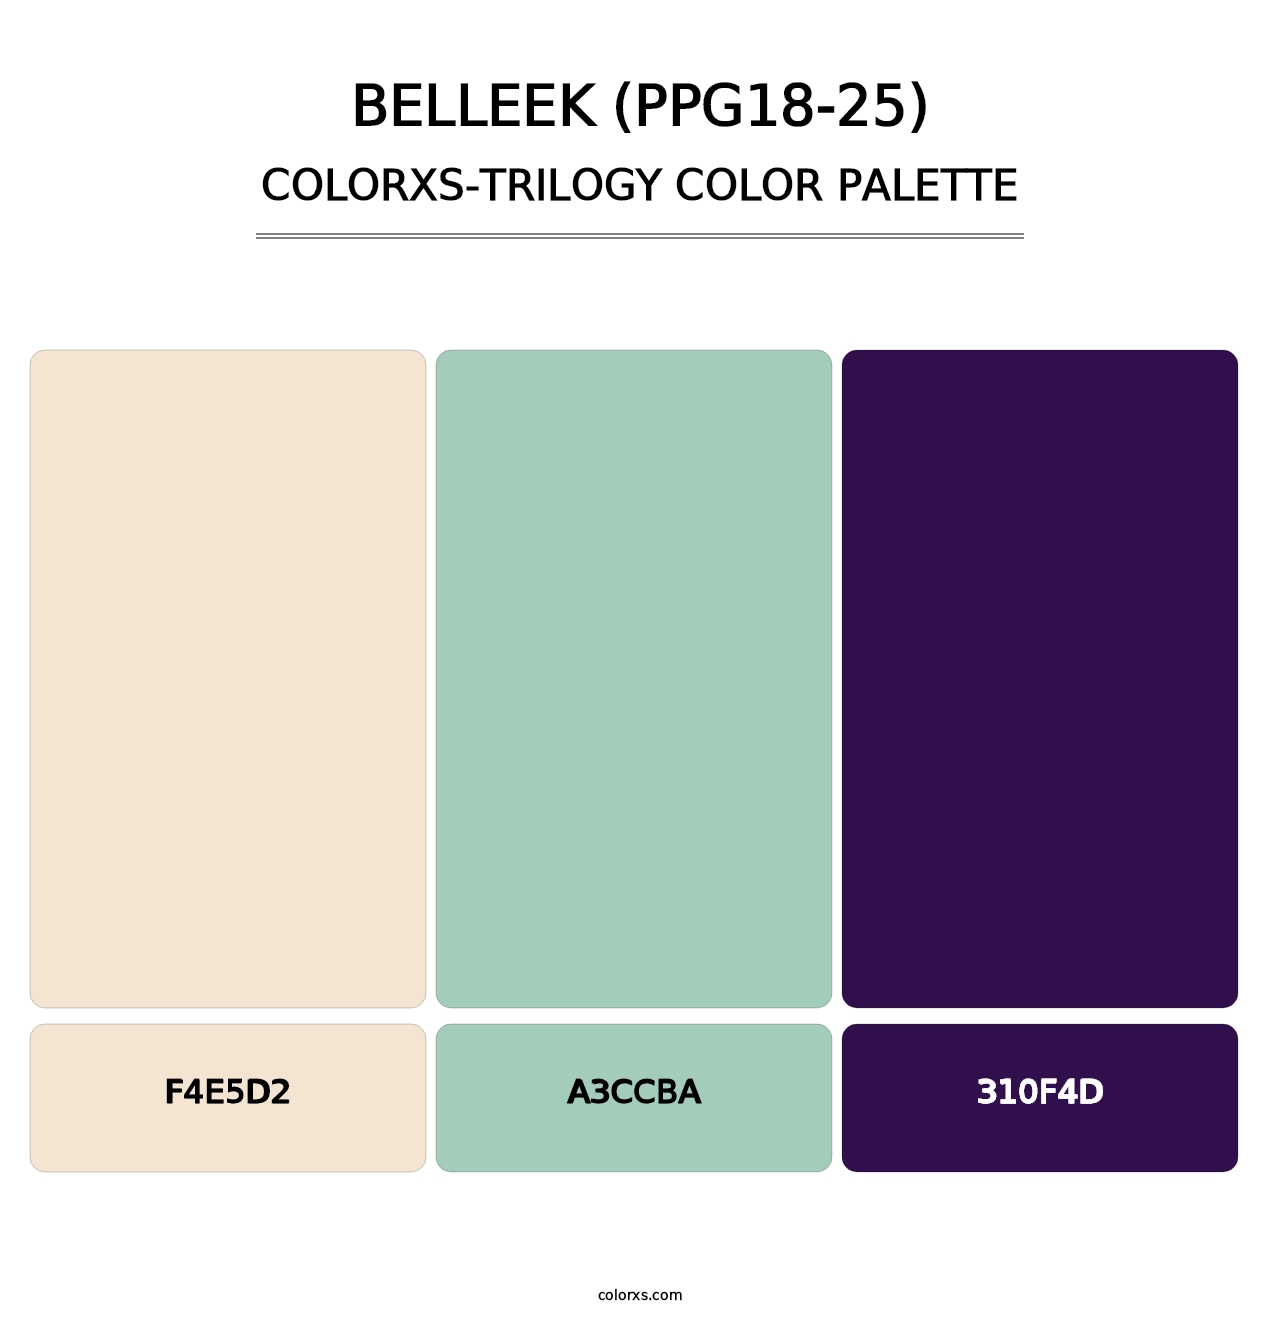 Belleek (PPG18-25) - Colorxs Trilogy Palette